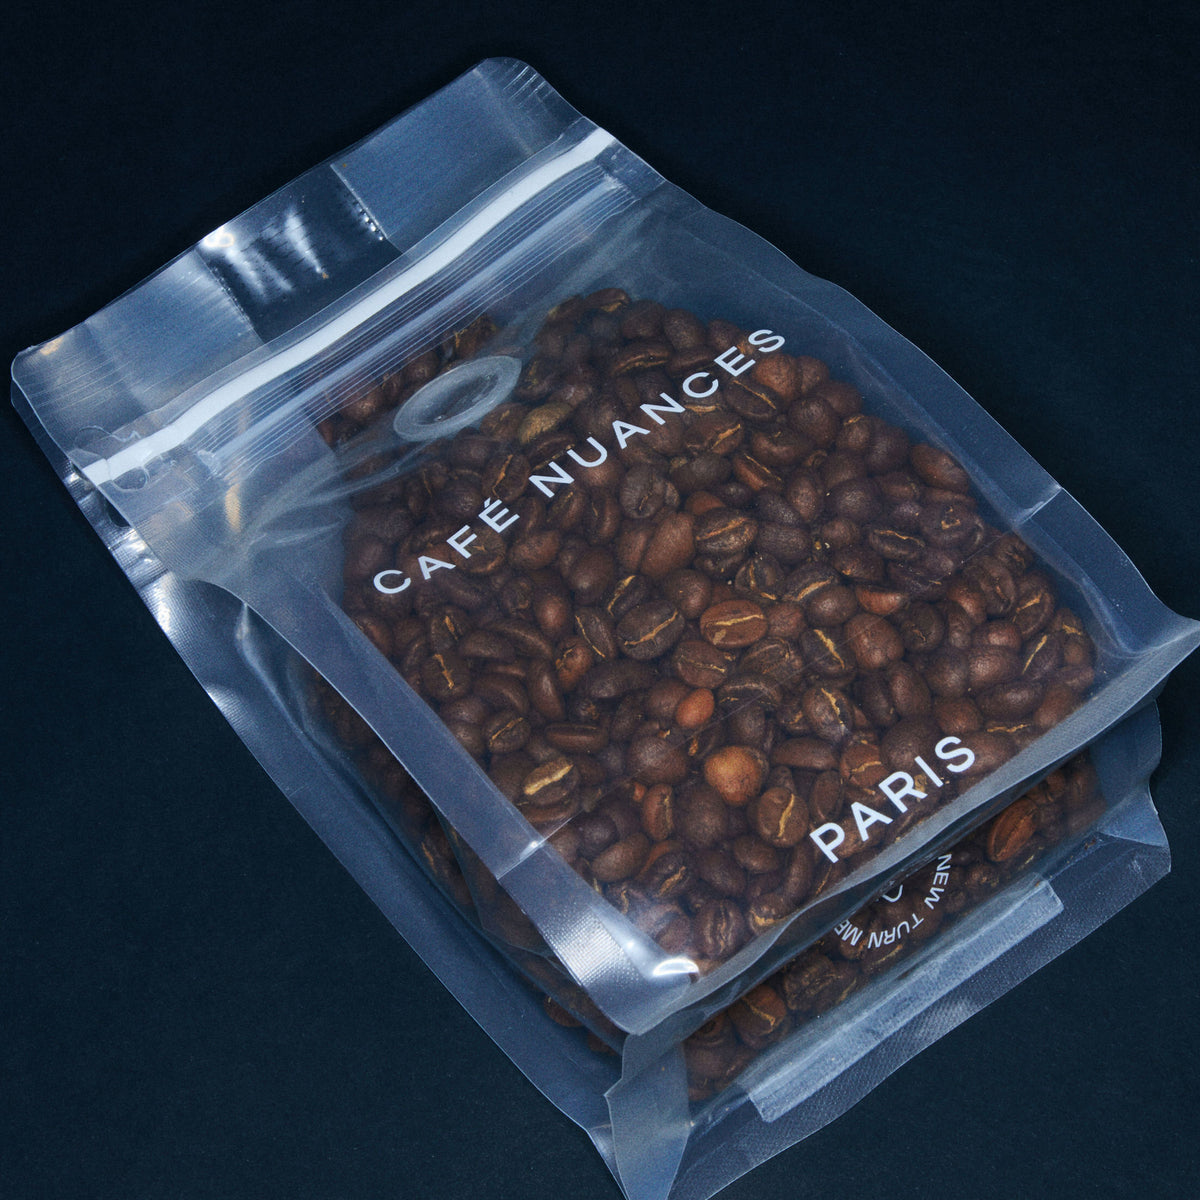 Coffee Beans | Specialty Coffee | Café Nuances | Paris